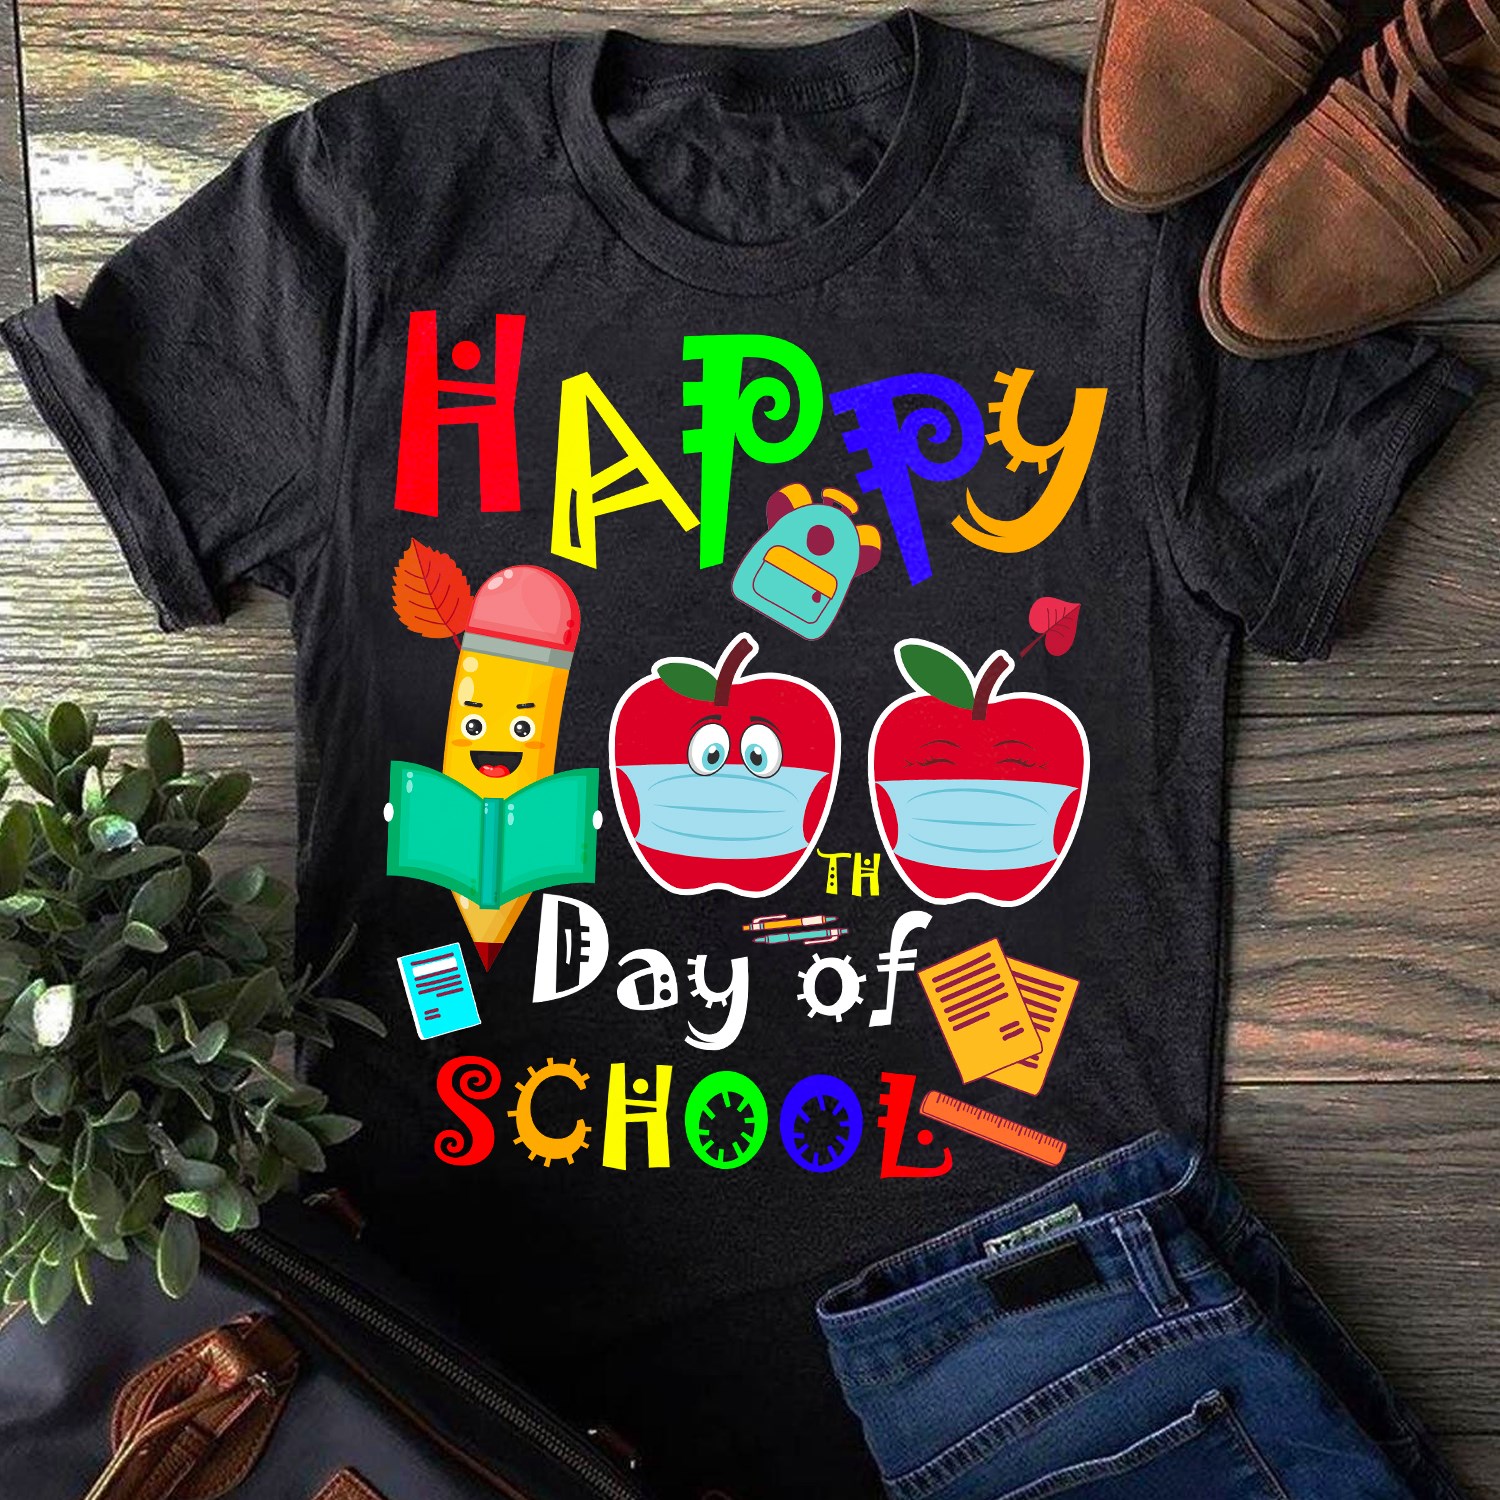 Happy day of school - Quarantine apple pencil and books